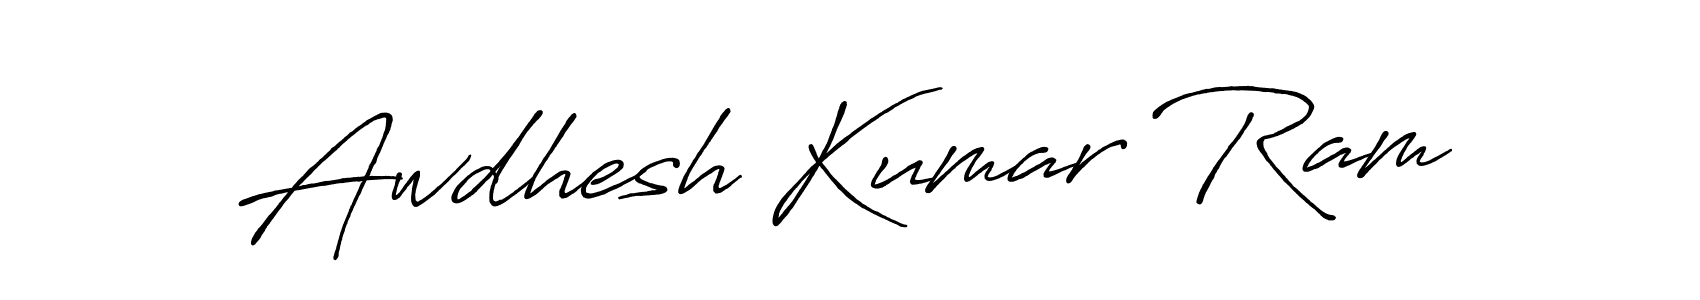 How to Draw Awdhesh Kumar Ram signature style? Antro_Vectra_Bolder is a latest design signature styles for name Awdhesh Kumar Ram. Awdhesh Kumar Ram signature style 7 images and pictures png